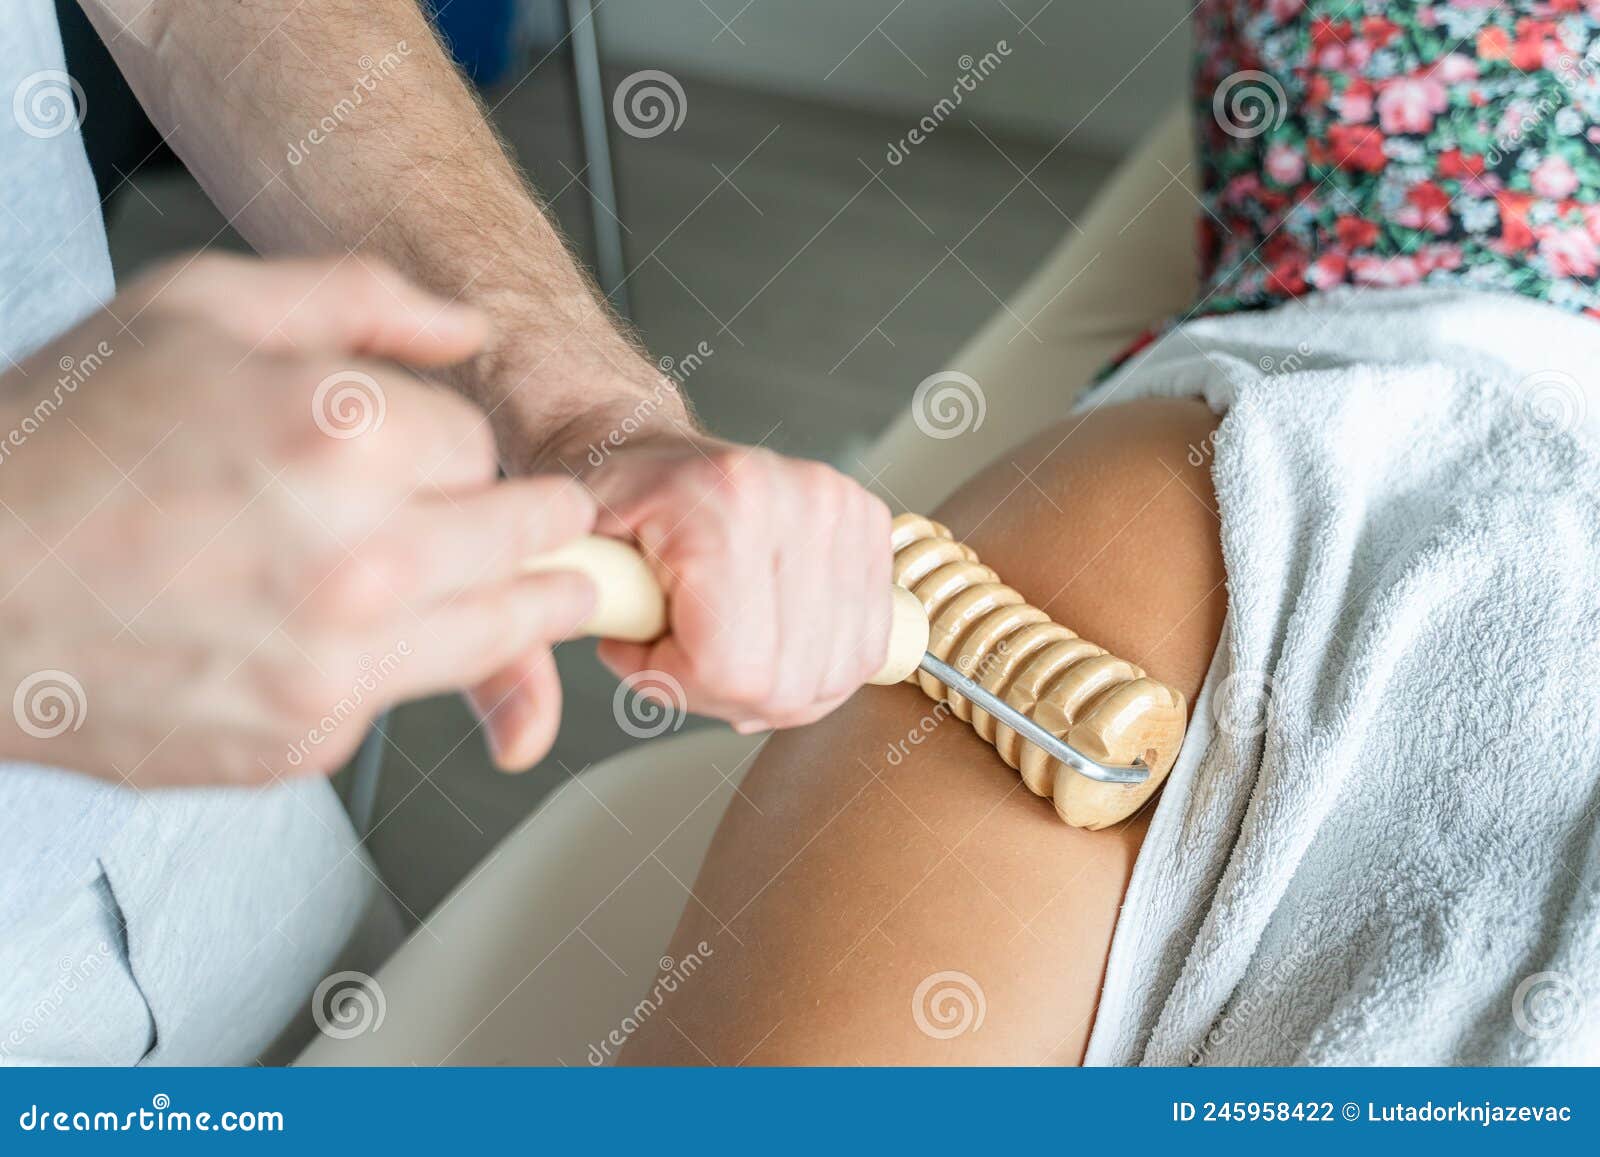 Unknown Caucasian woman having madero therapy massage anti